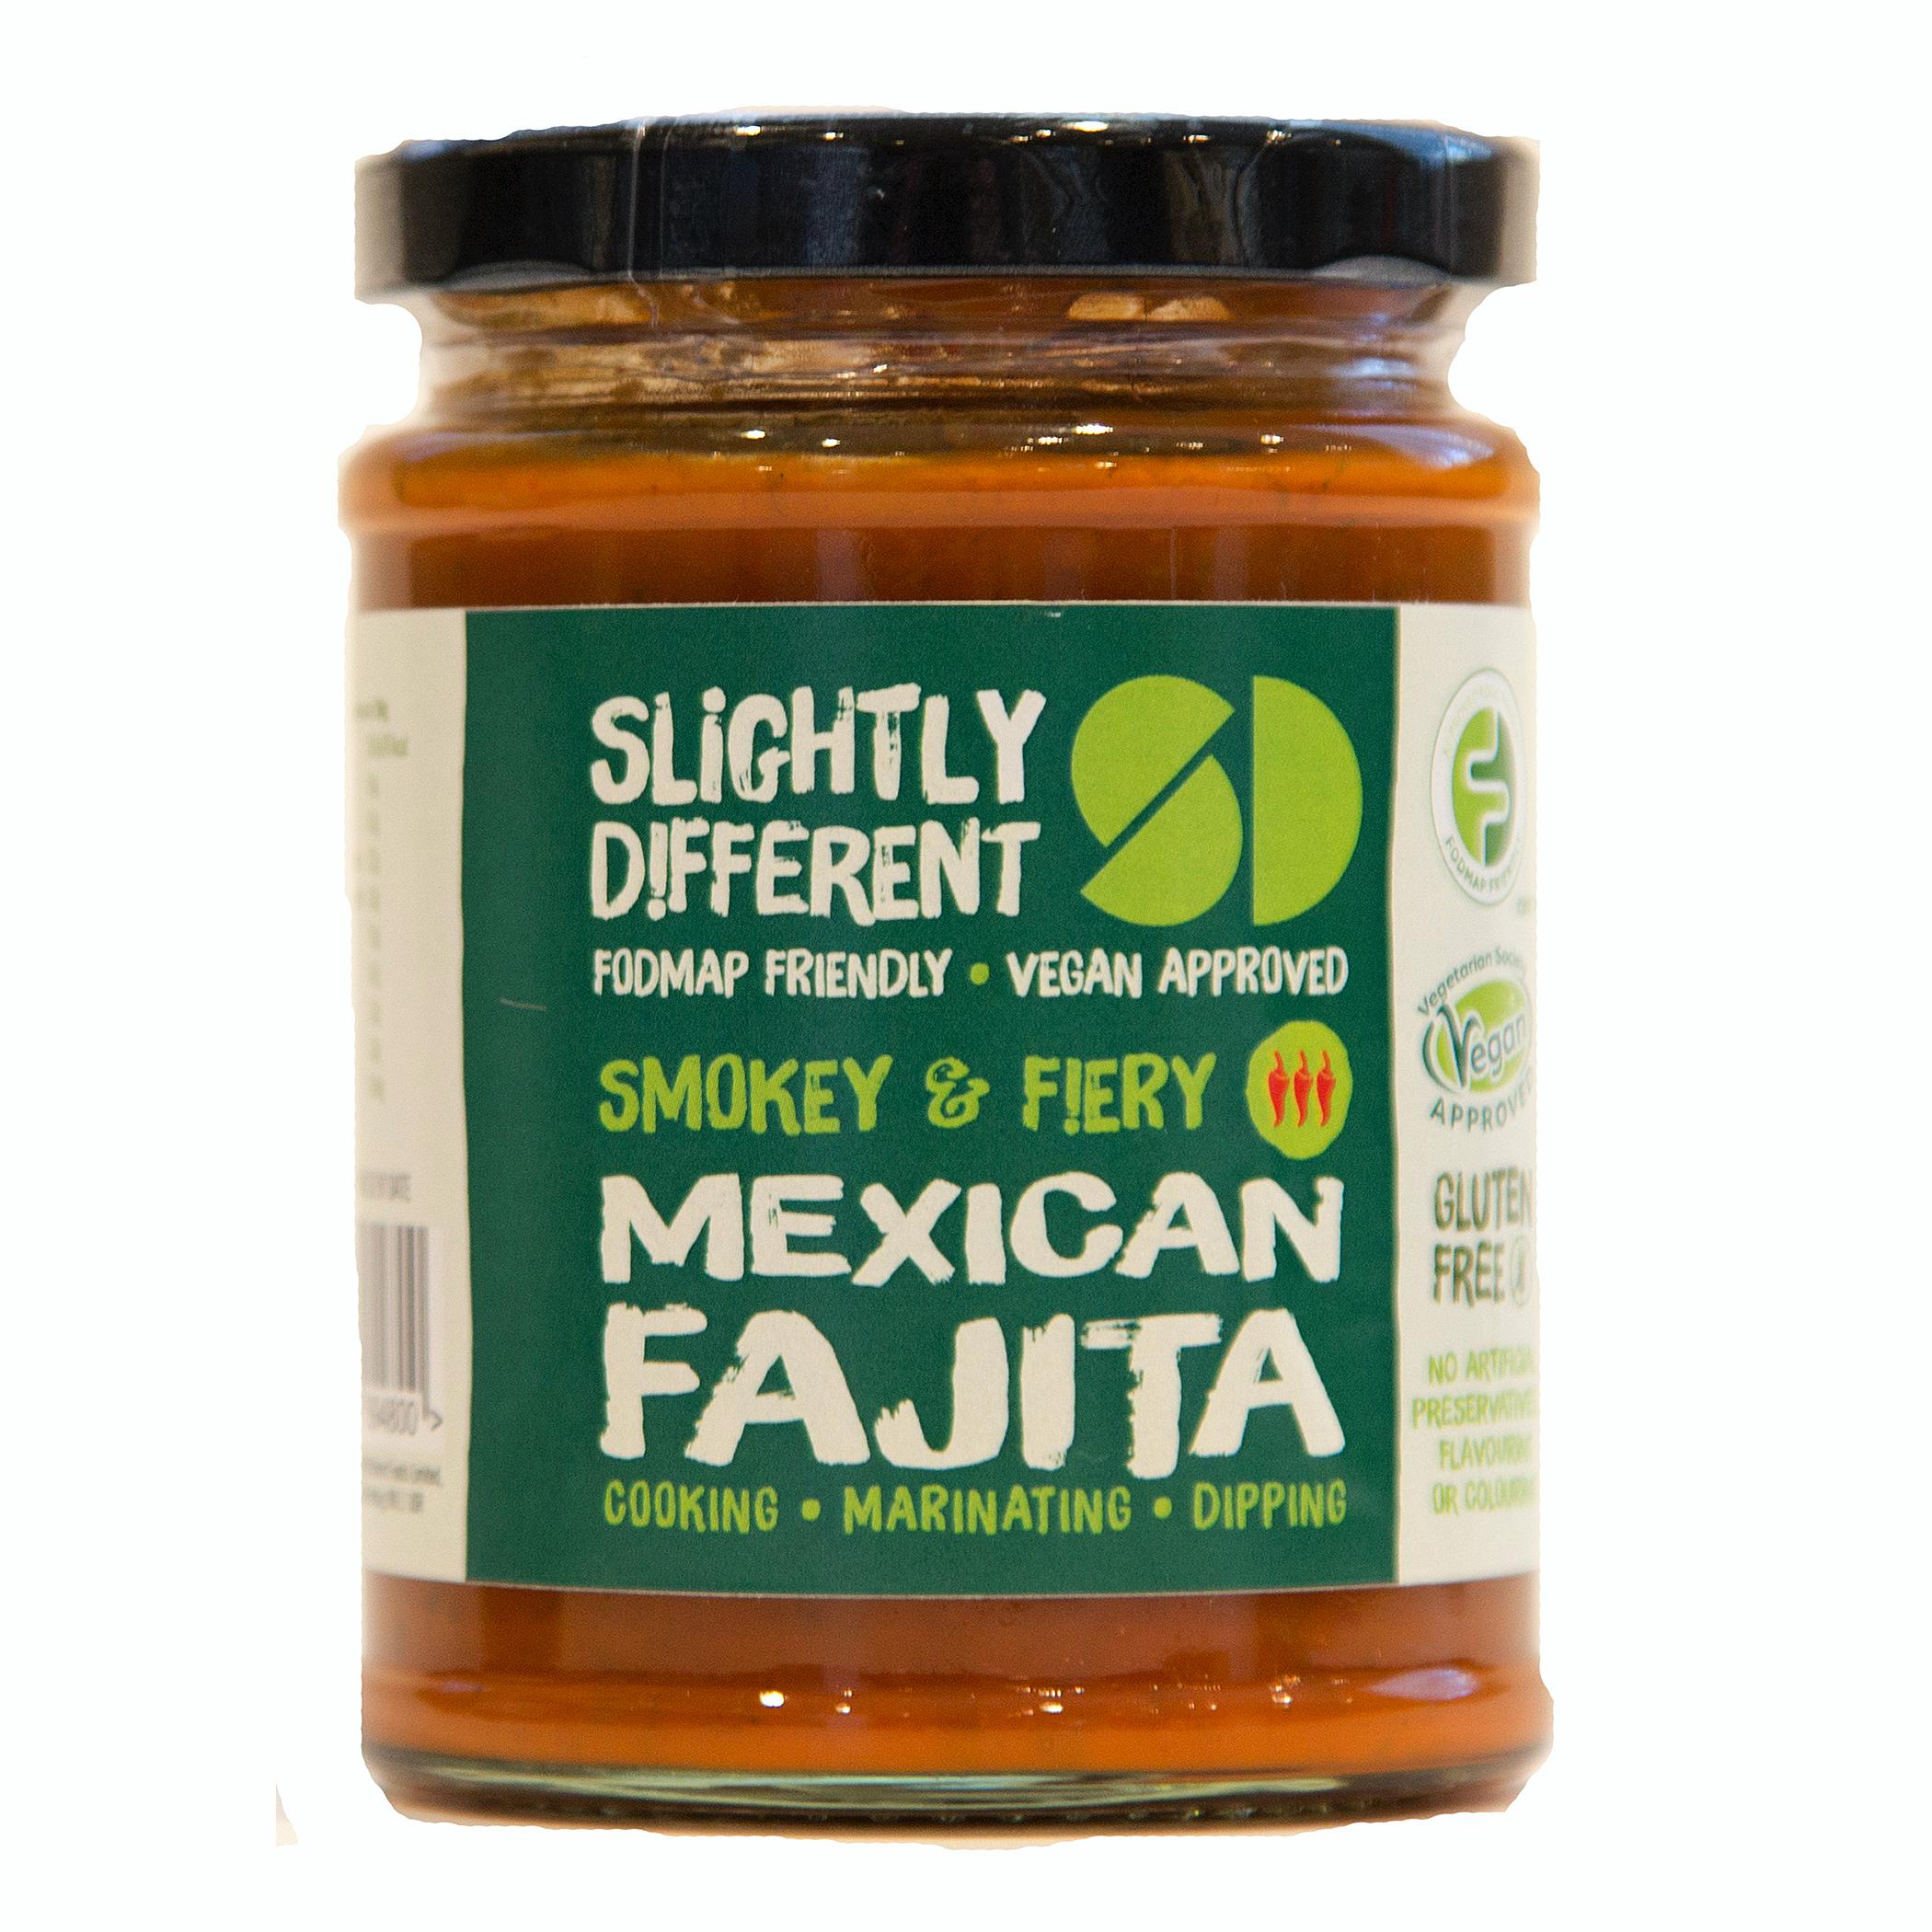 A jar of Slightly Different's Mexican Fajita Sauce